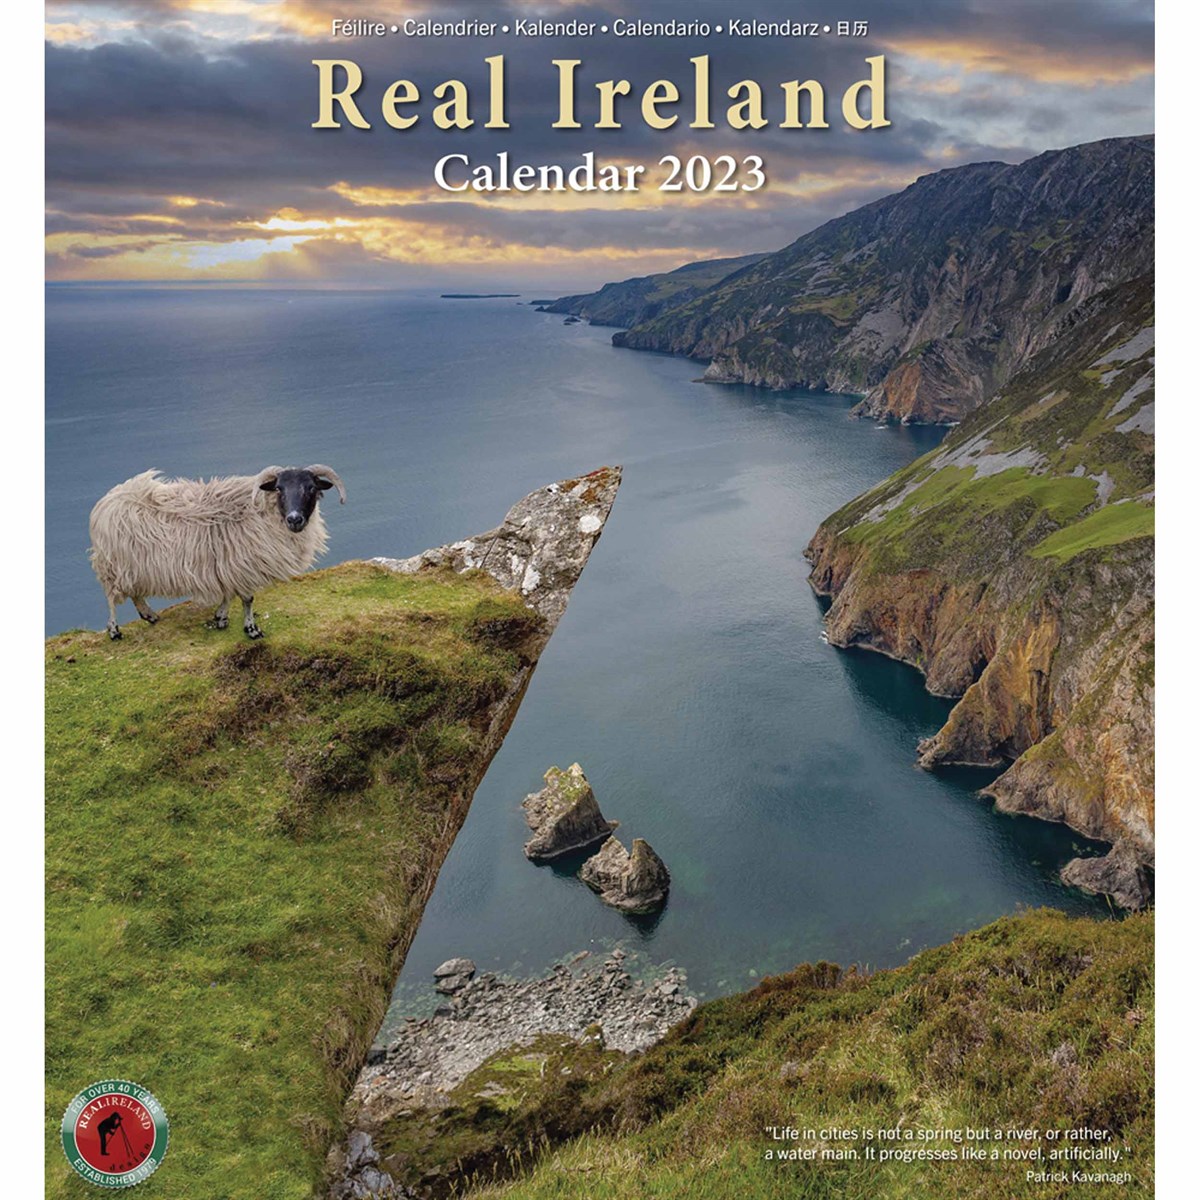 Real Ireland 2023 Calendars